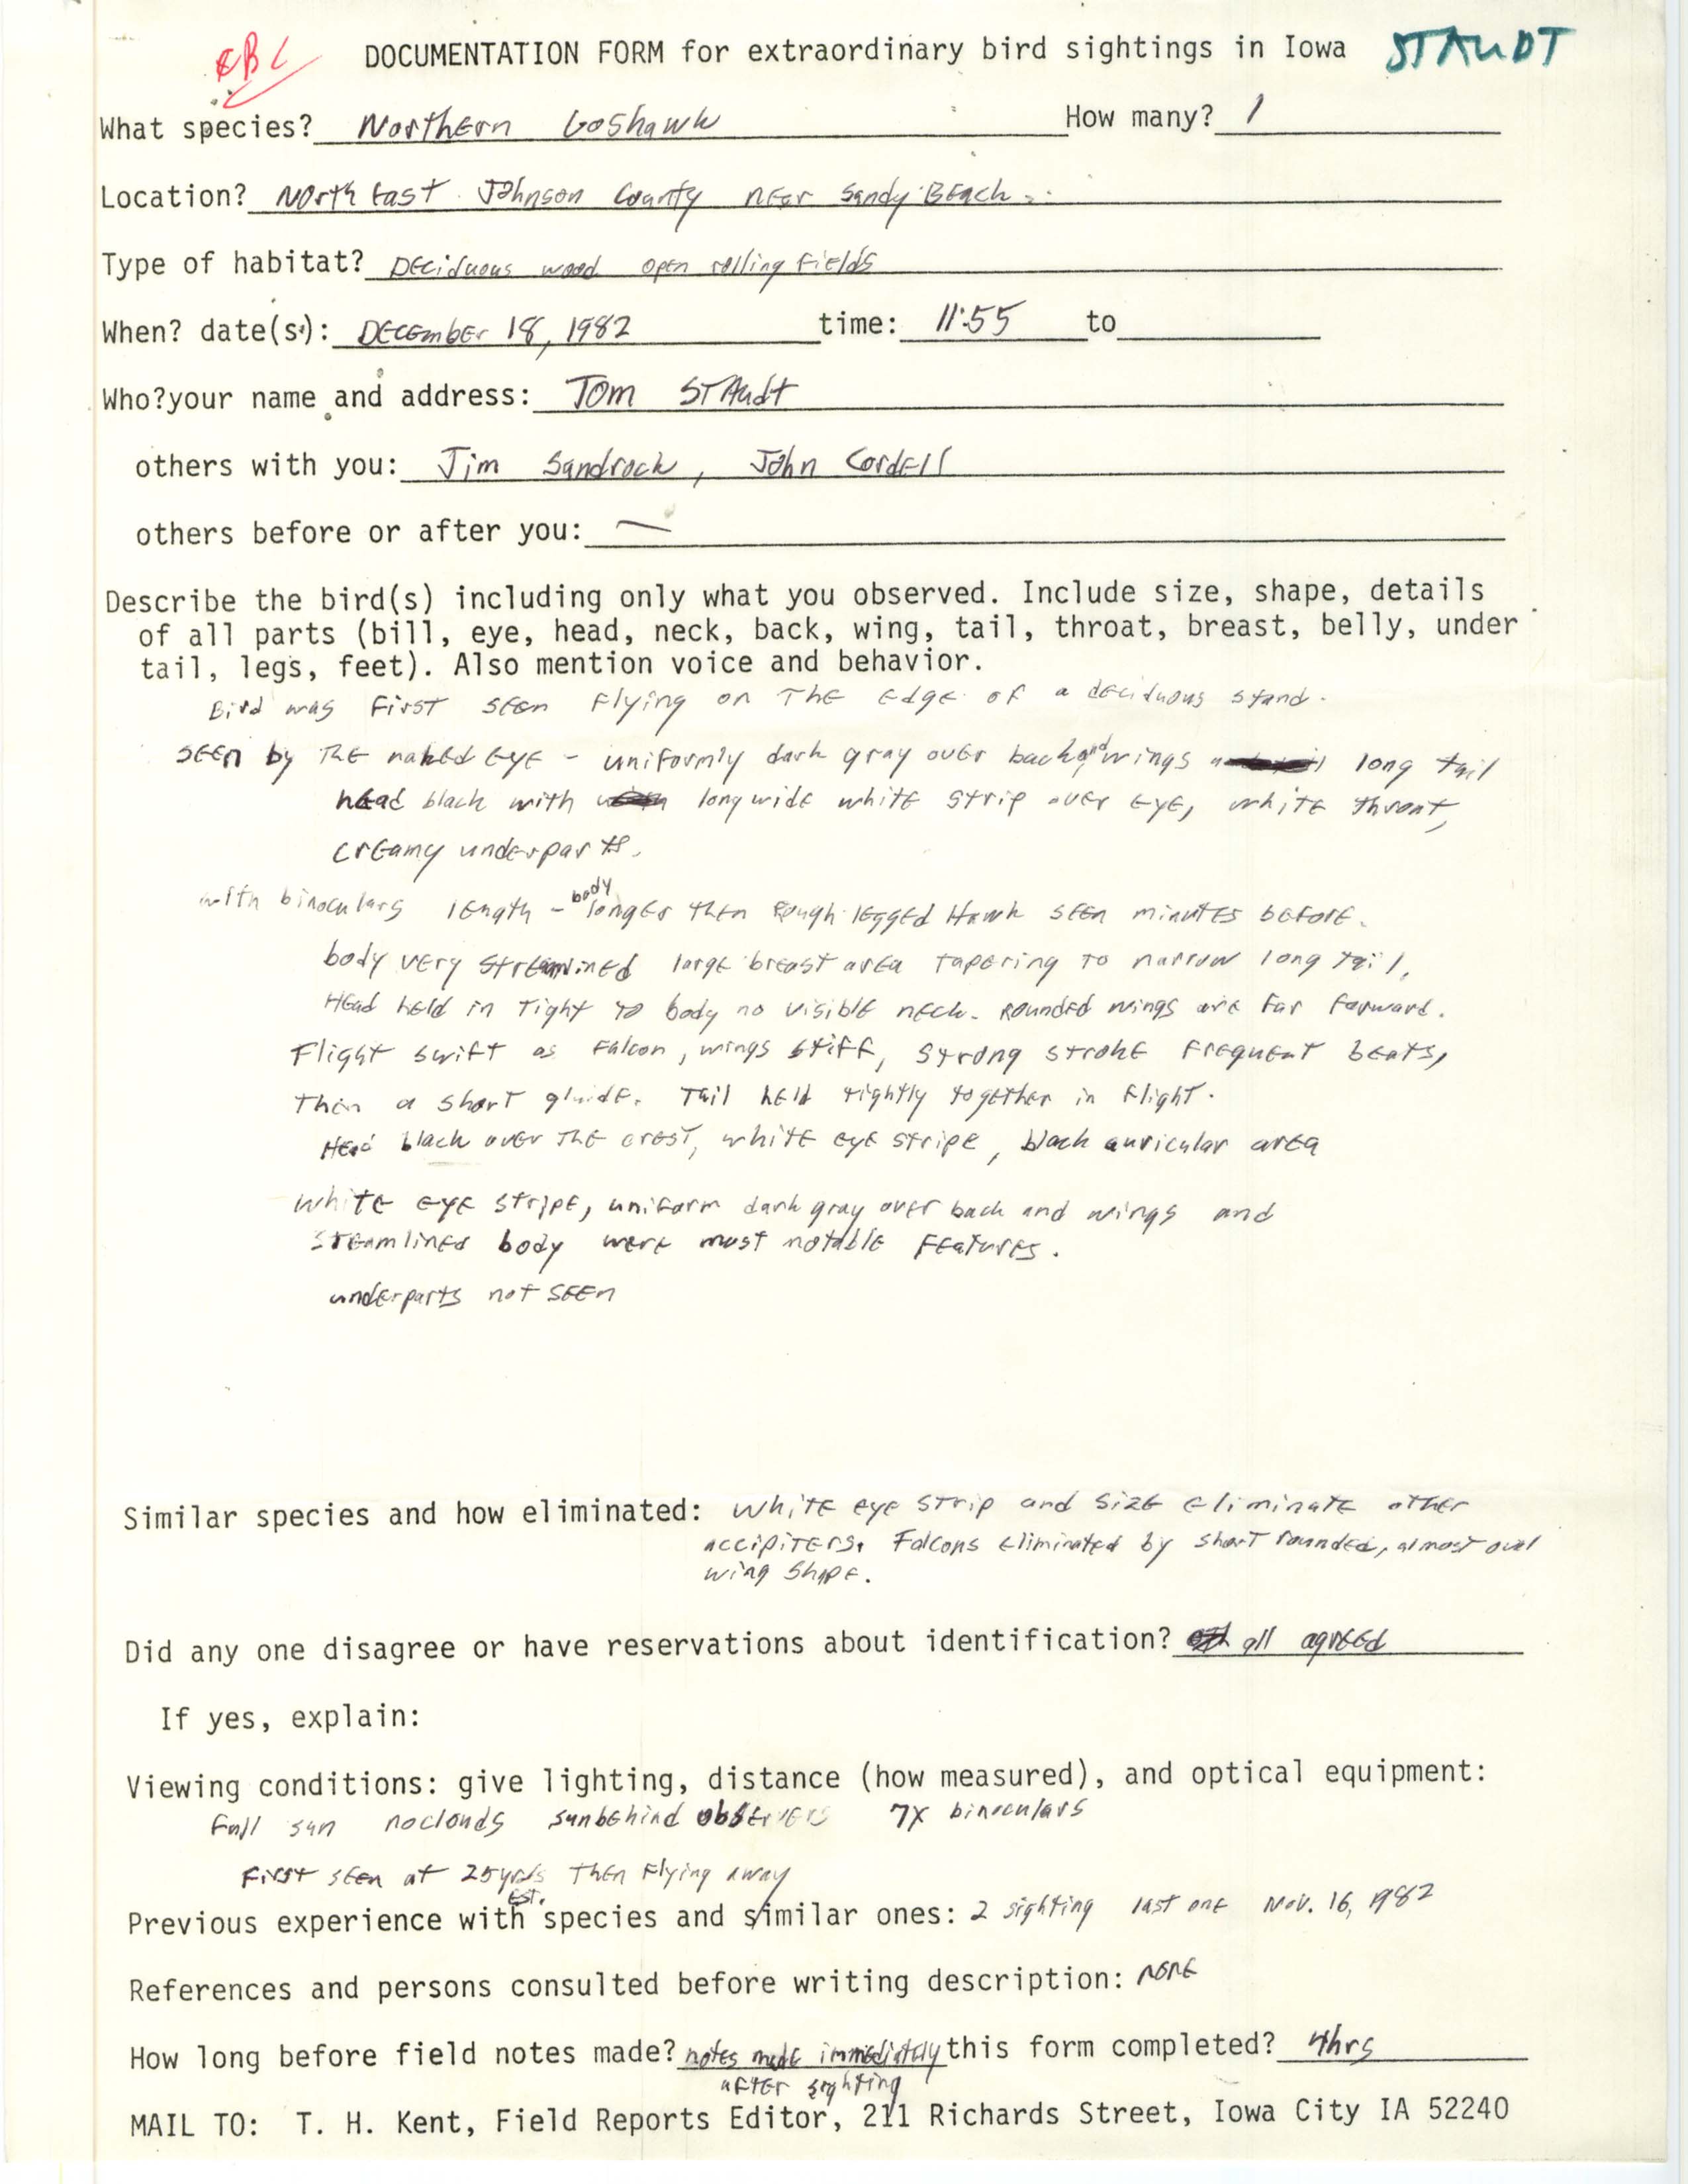 Rare bird documentation form for Northern Goshawk at Sandy Beach in Johnson County, 1982